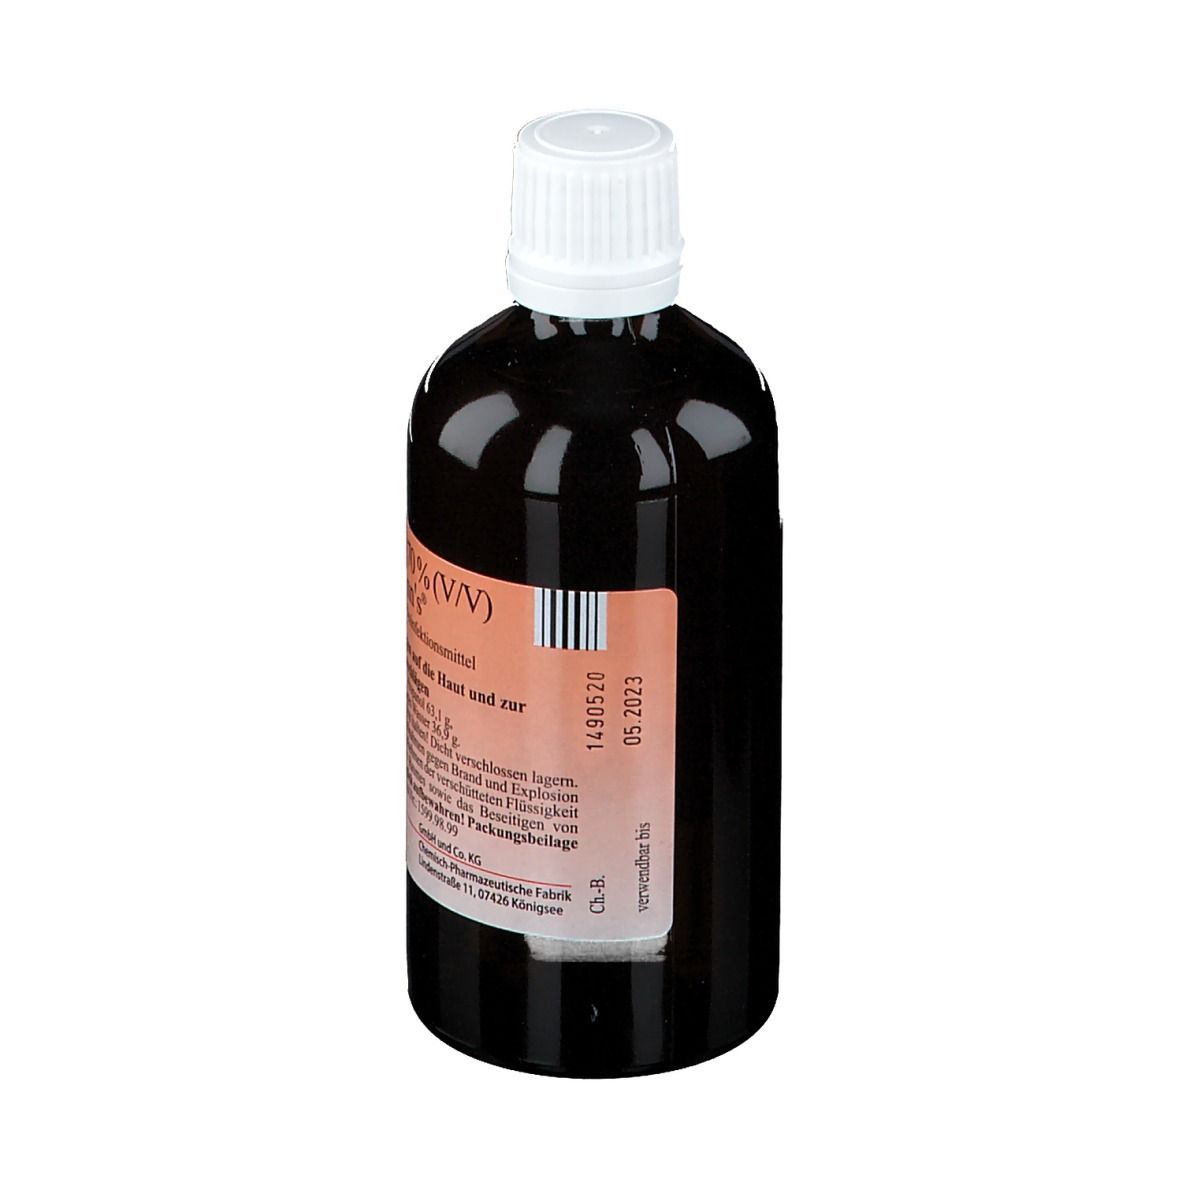 Isopropylalkohol 70% Lösung Hofmanns®